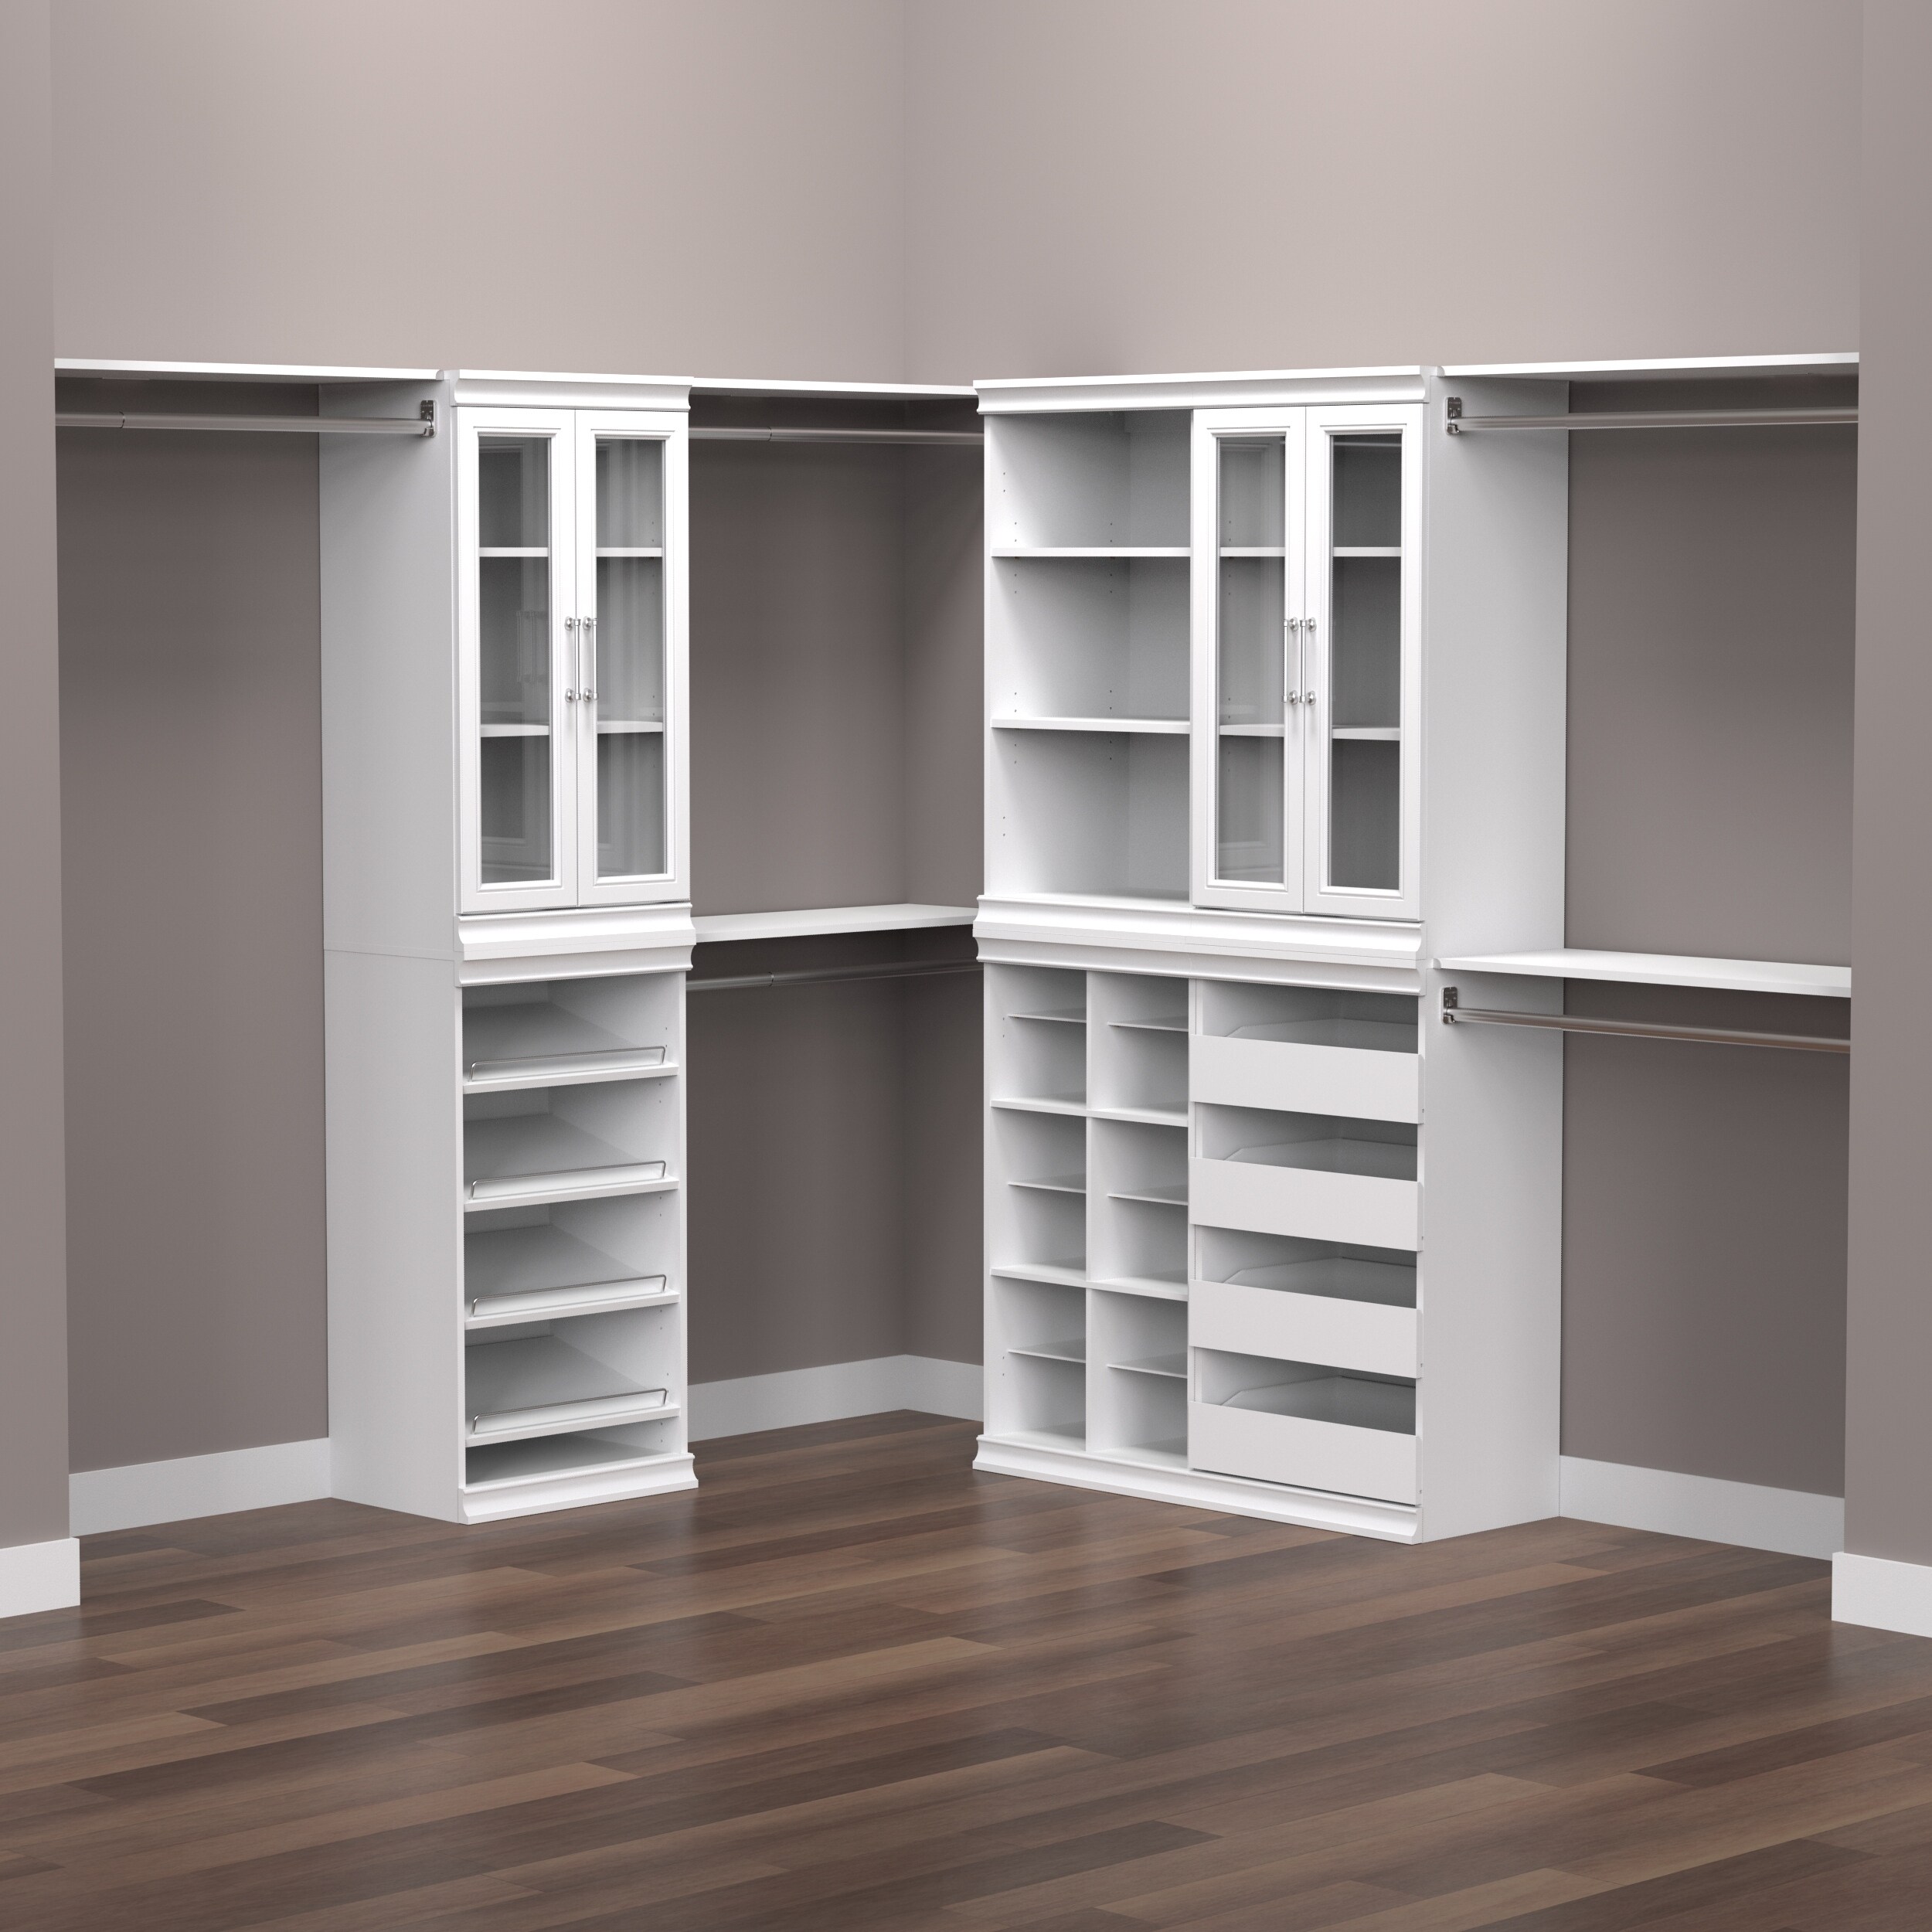 ClosetMaid Modular Storage 21.38 W Shelving Unit with 12 Shelves